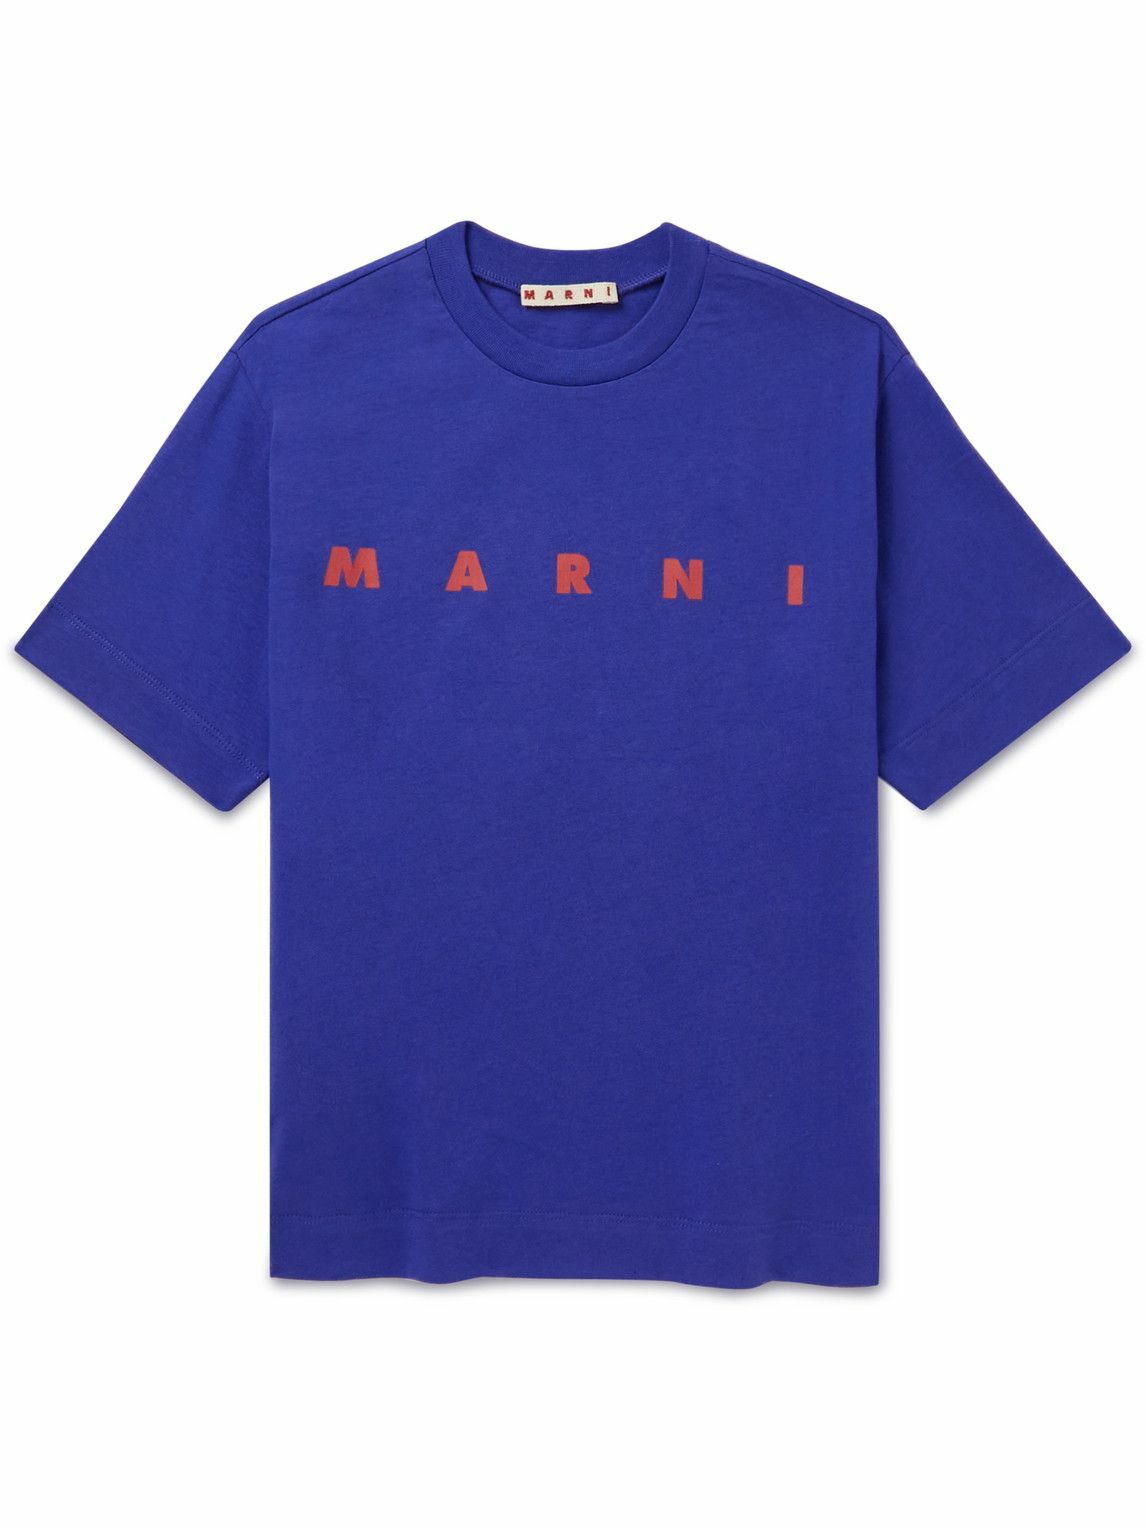 MARNI KIDS - Logo-Print Cotton-Jersey T-Shirt - Blue